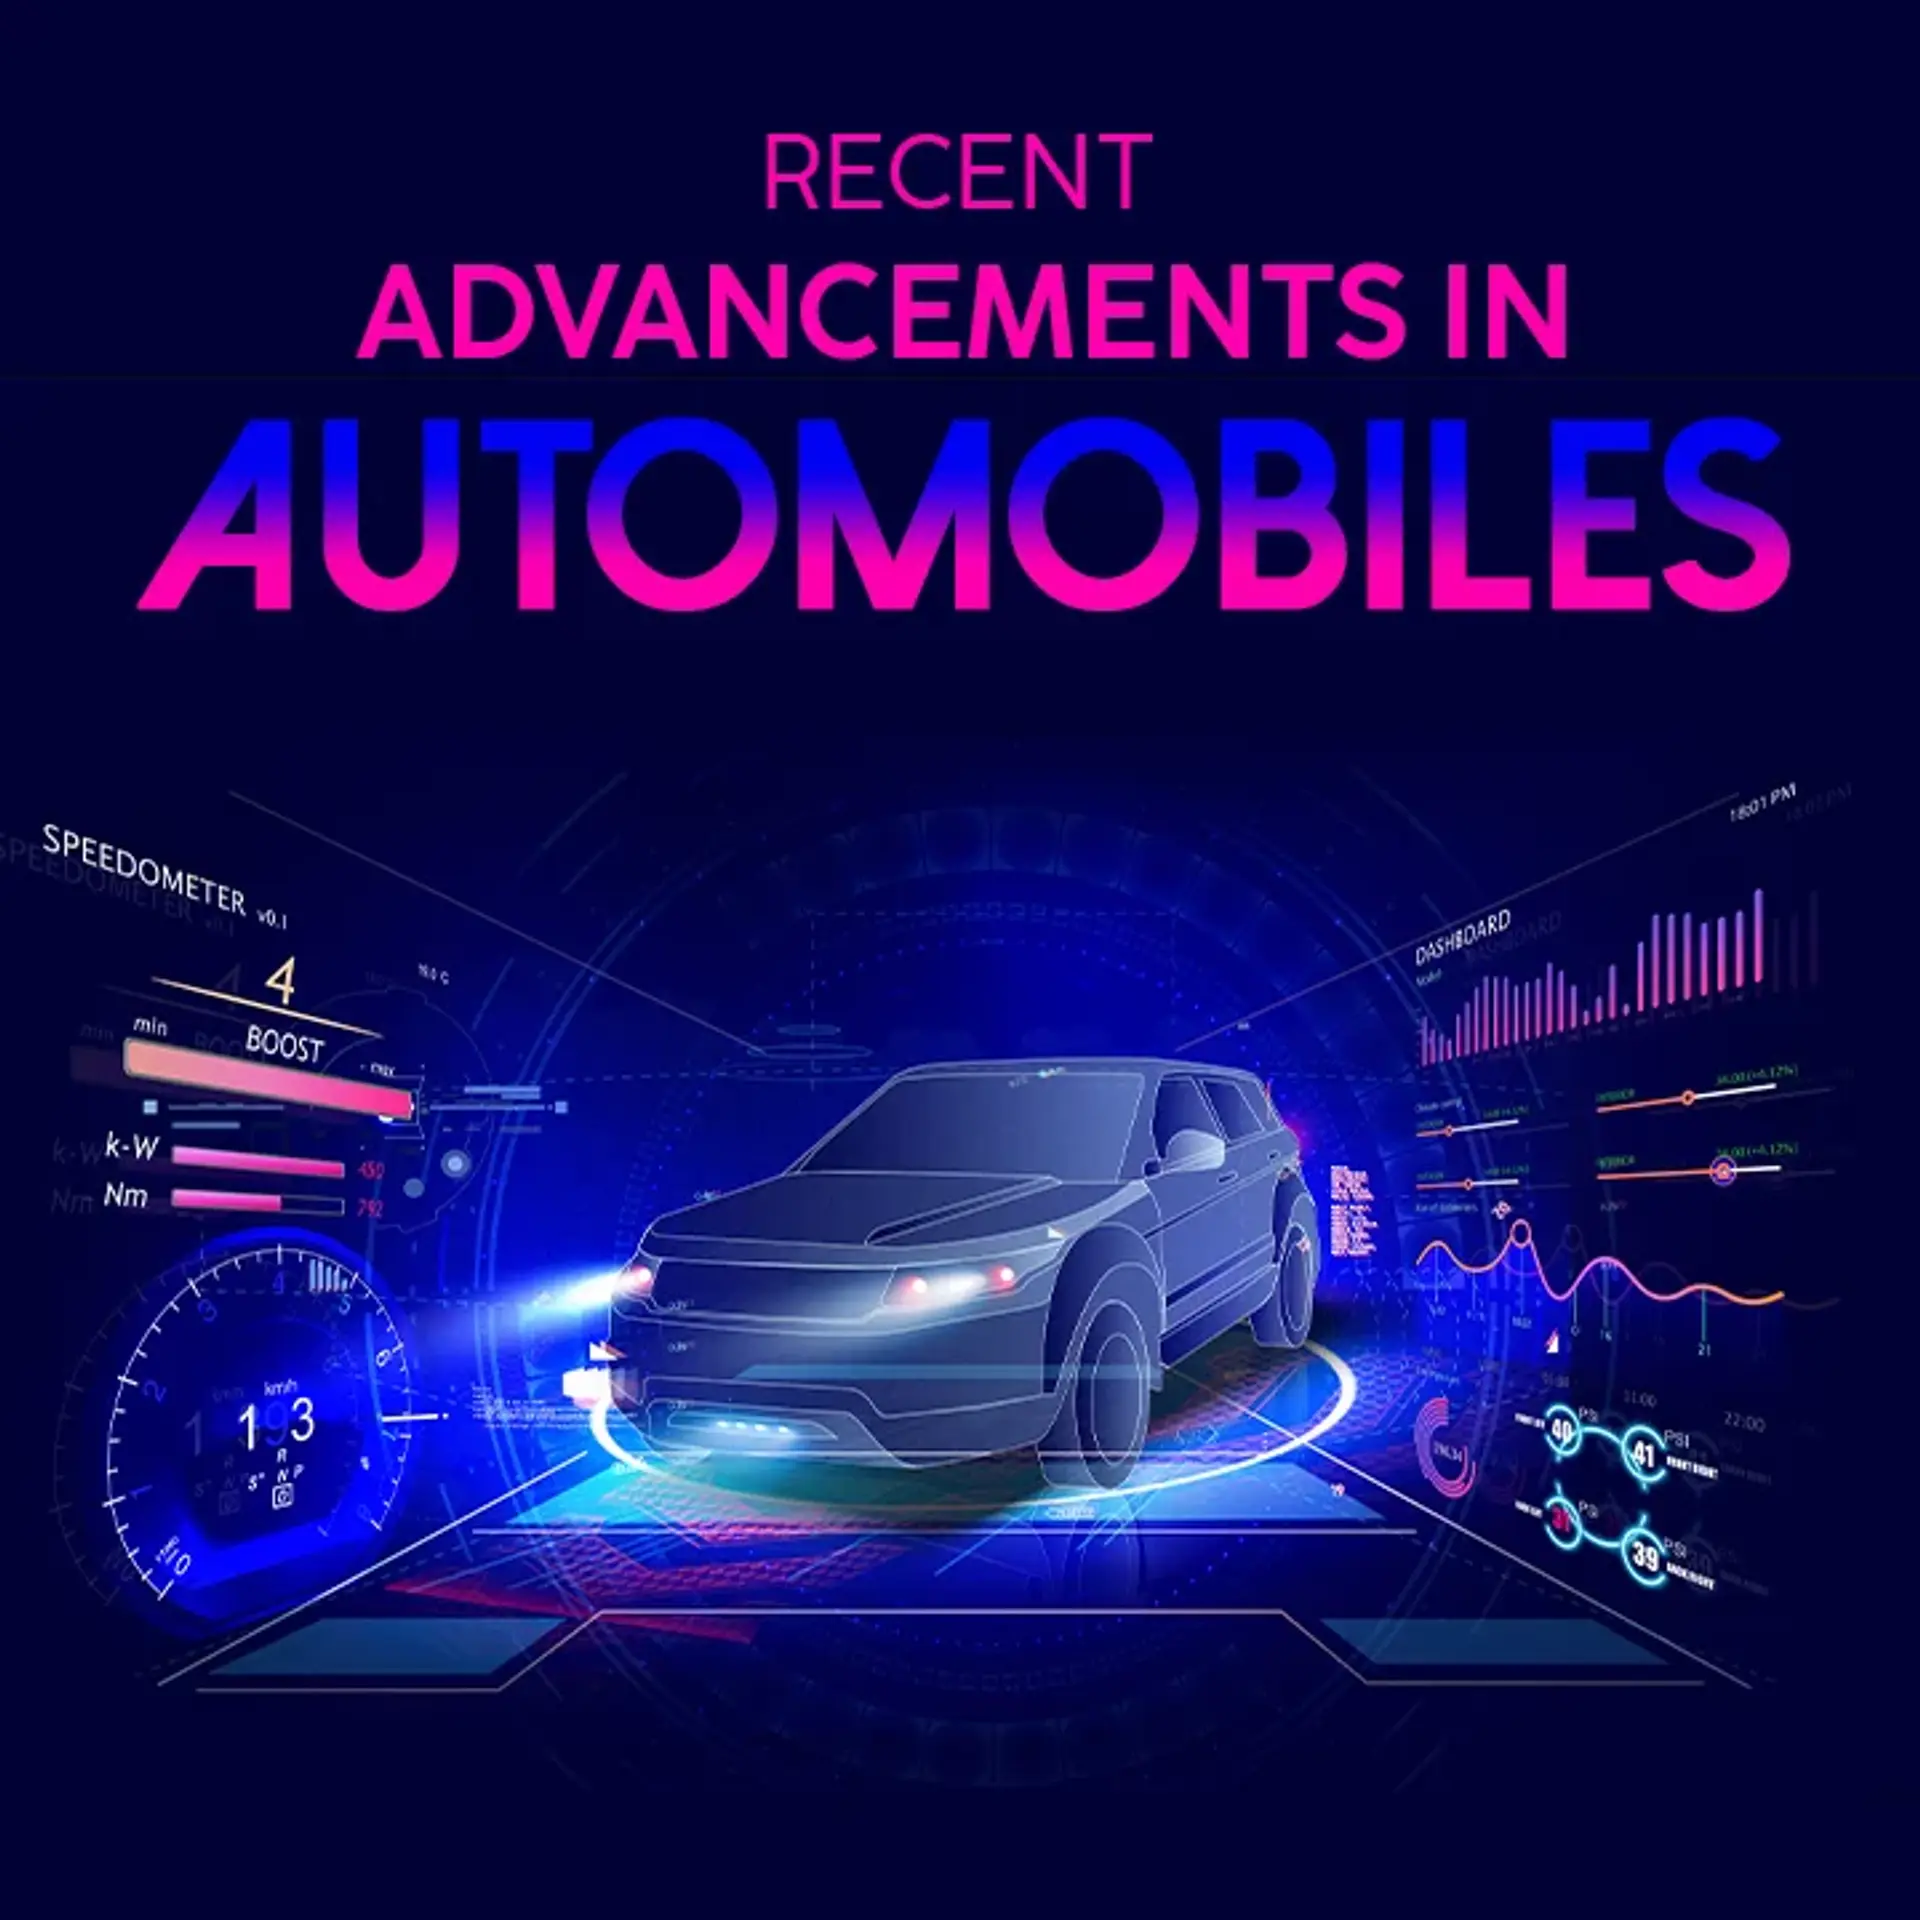 Automobile - EP 9 - 2022 Tech